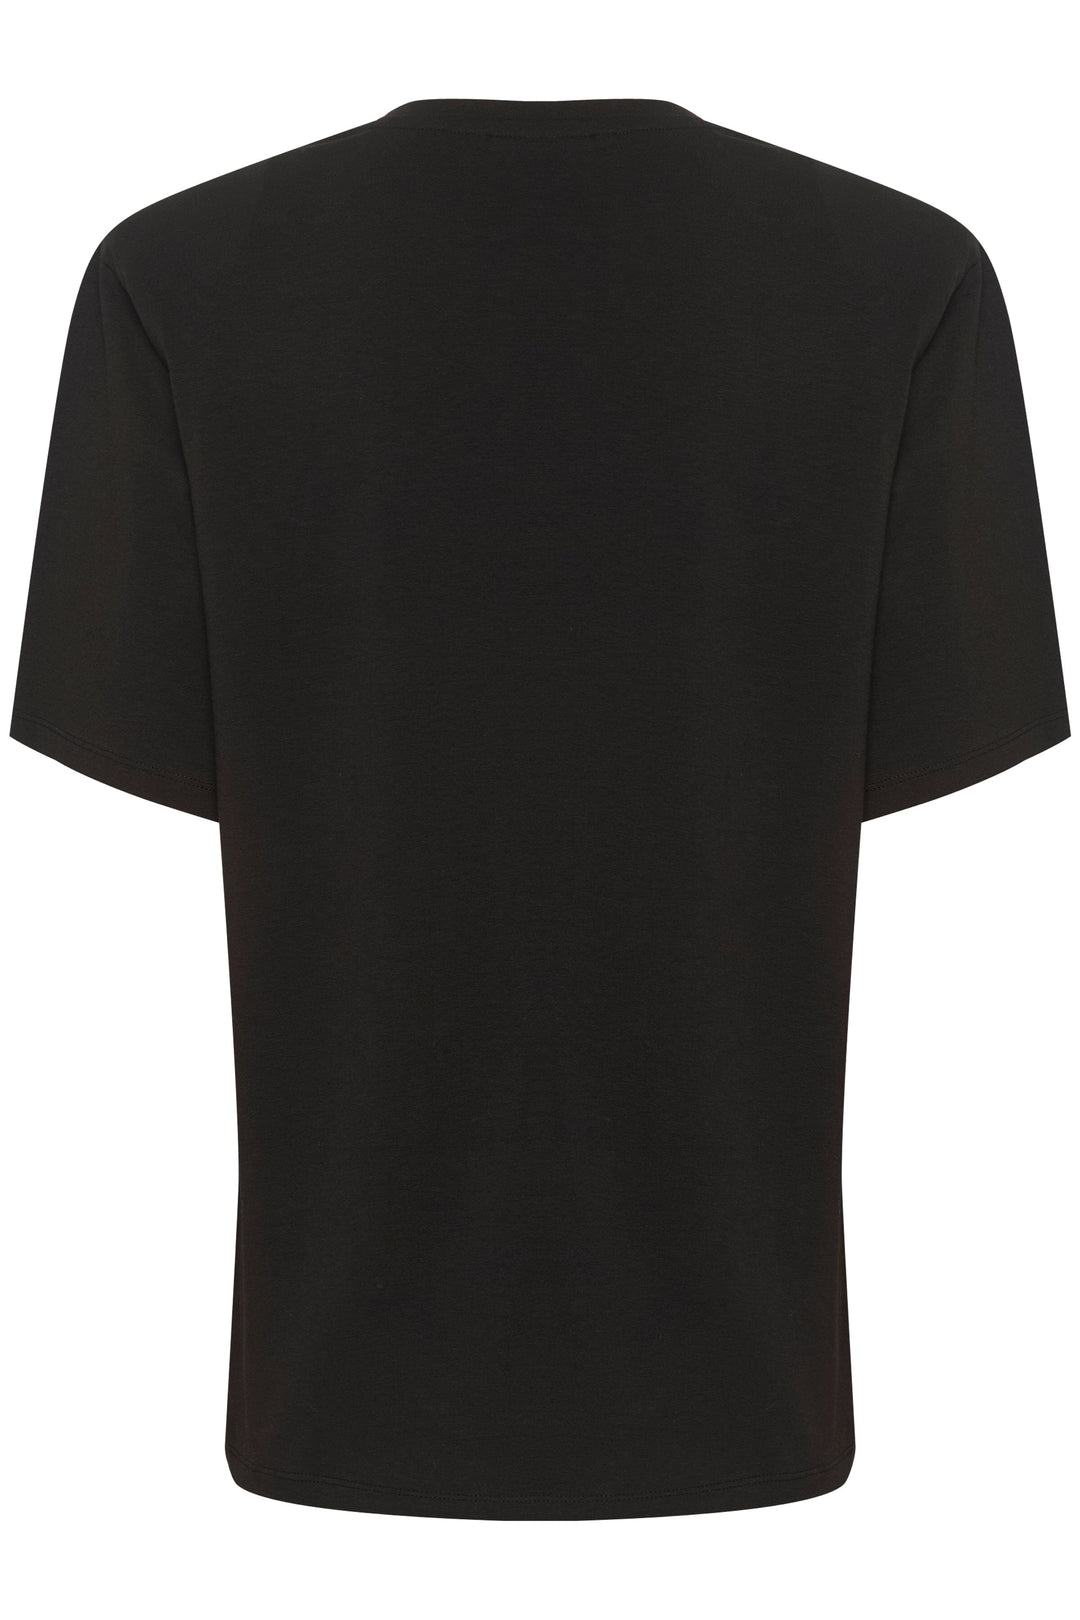 Gestuz - SamurillyGZ P tee - Black T-shirts 